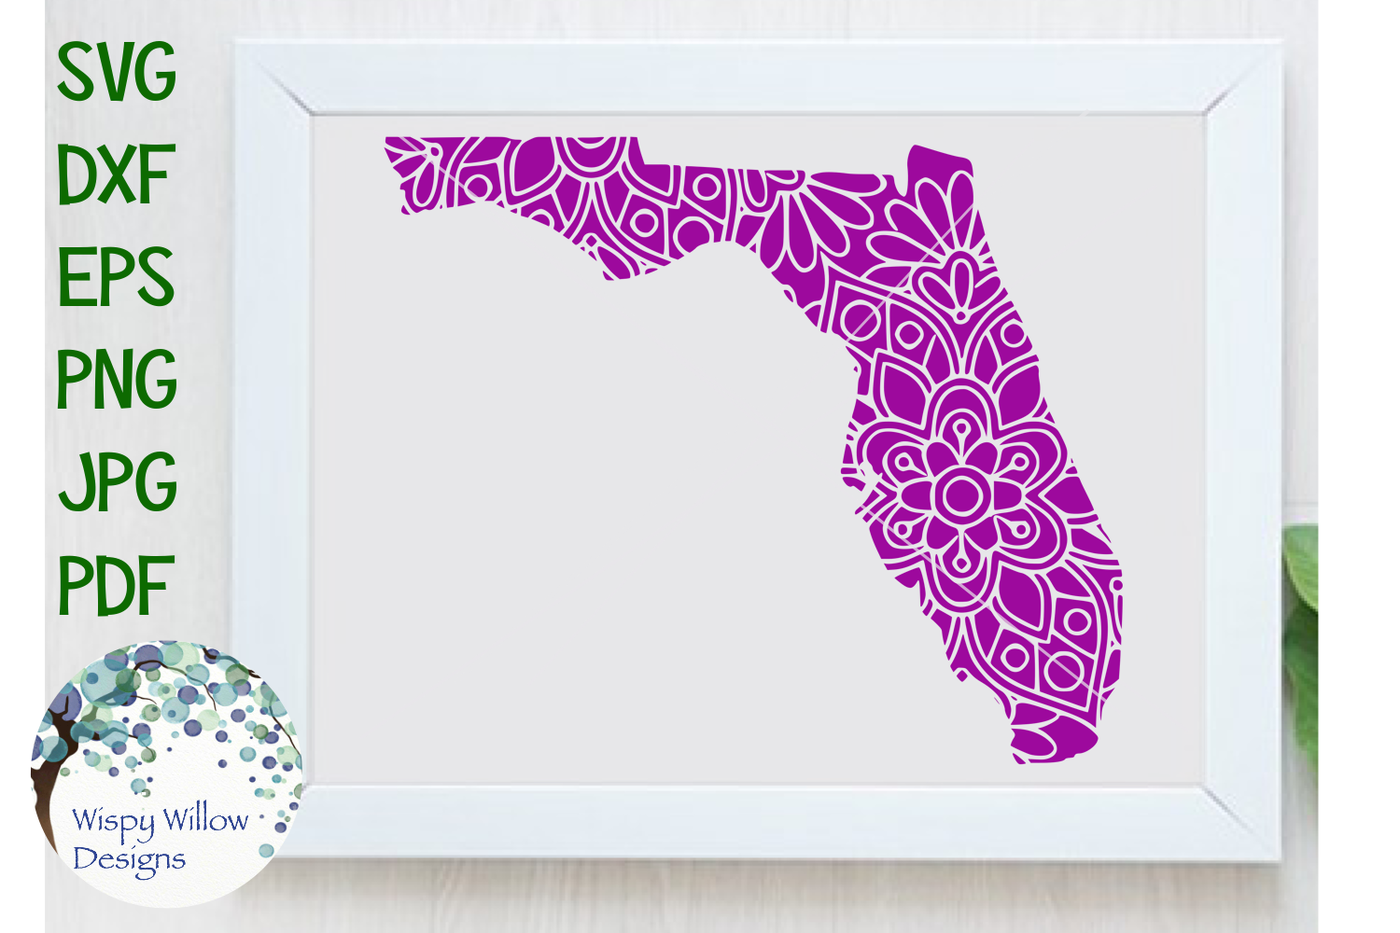 Download Clip Art State Outline Svg Florida Zentangle Zentangle Svg Mandala Svg Florida Outline Svg Florida Svg Florida Mandala Florida Mandala Svg Art Collectibles